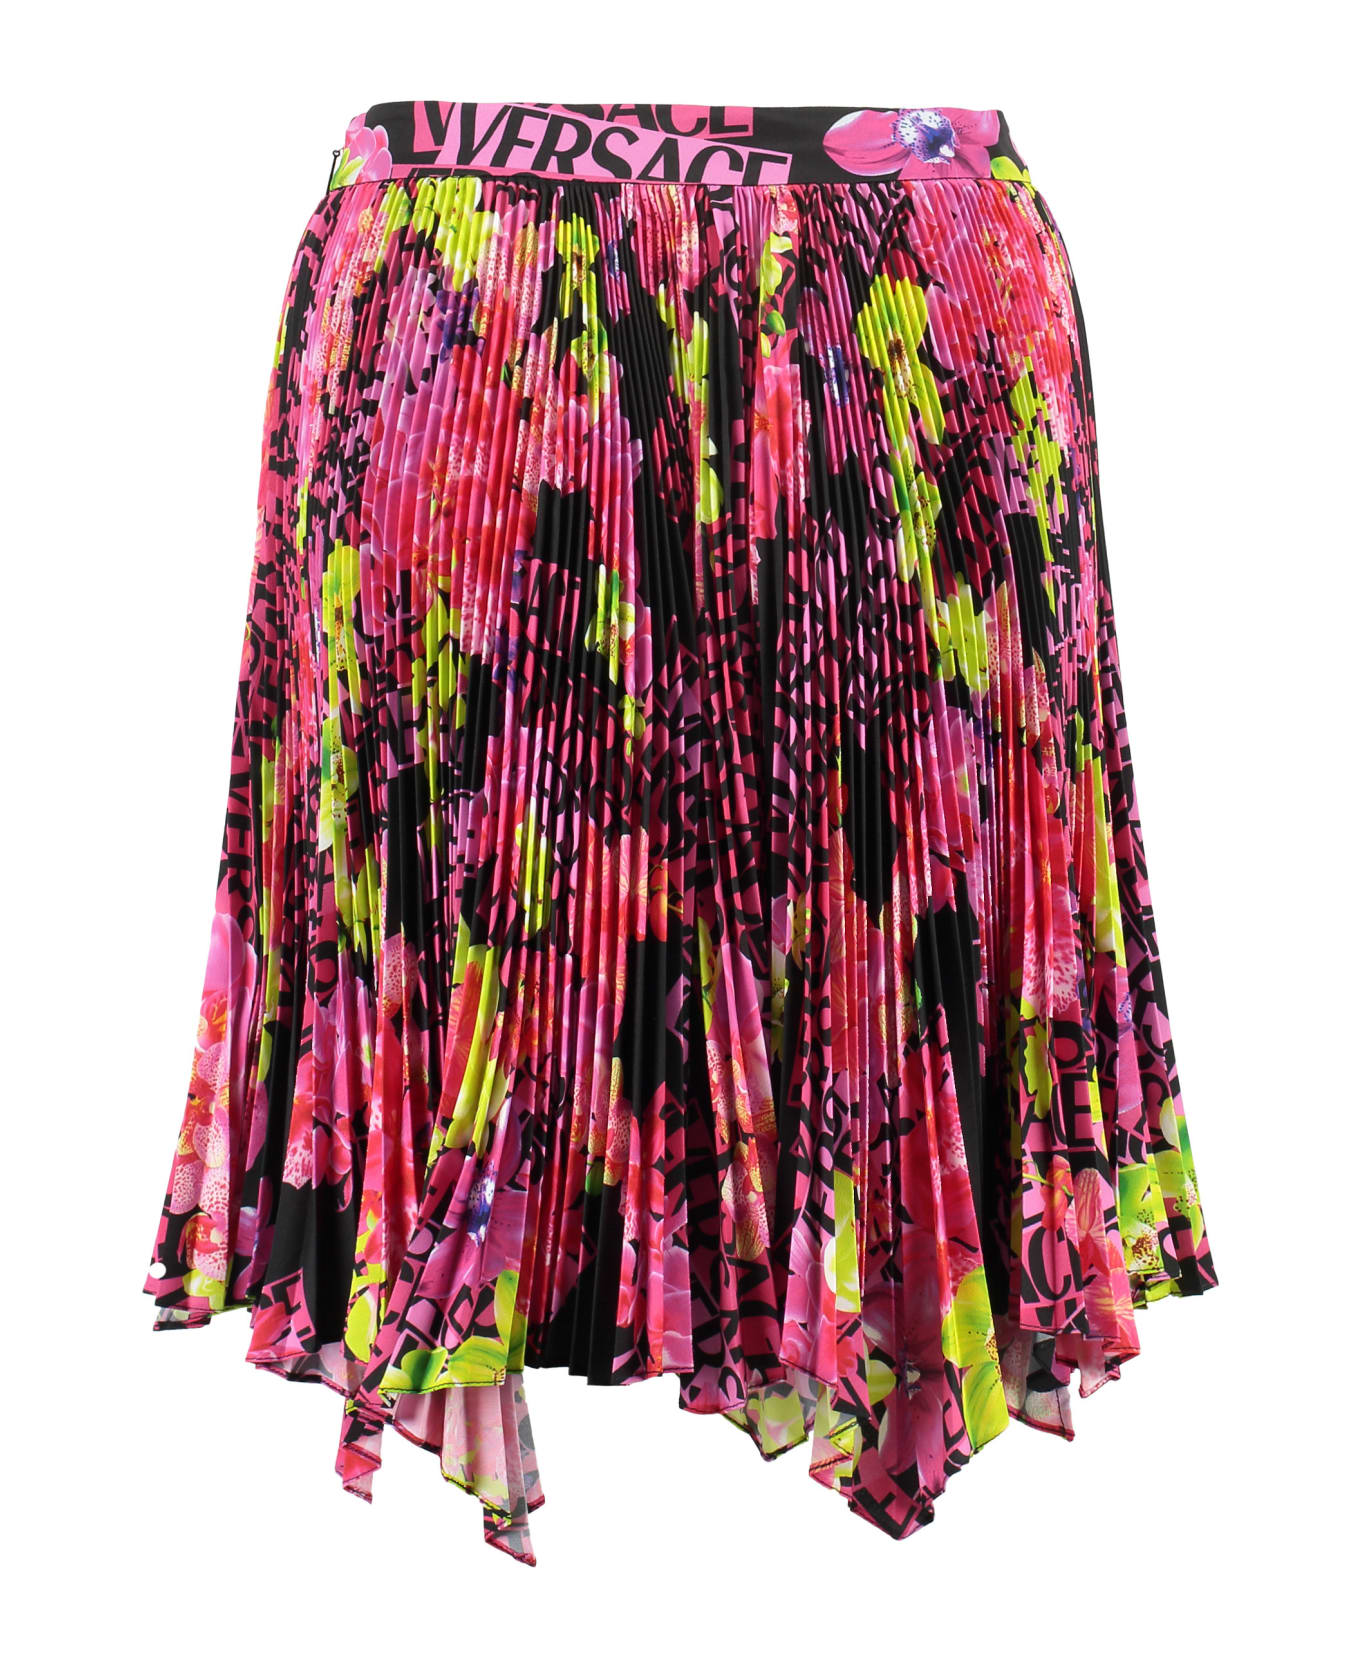 Versace Printed Pleated Skirt - PINK